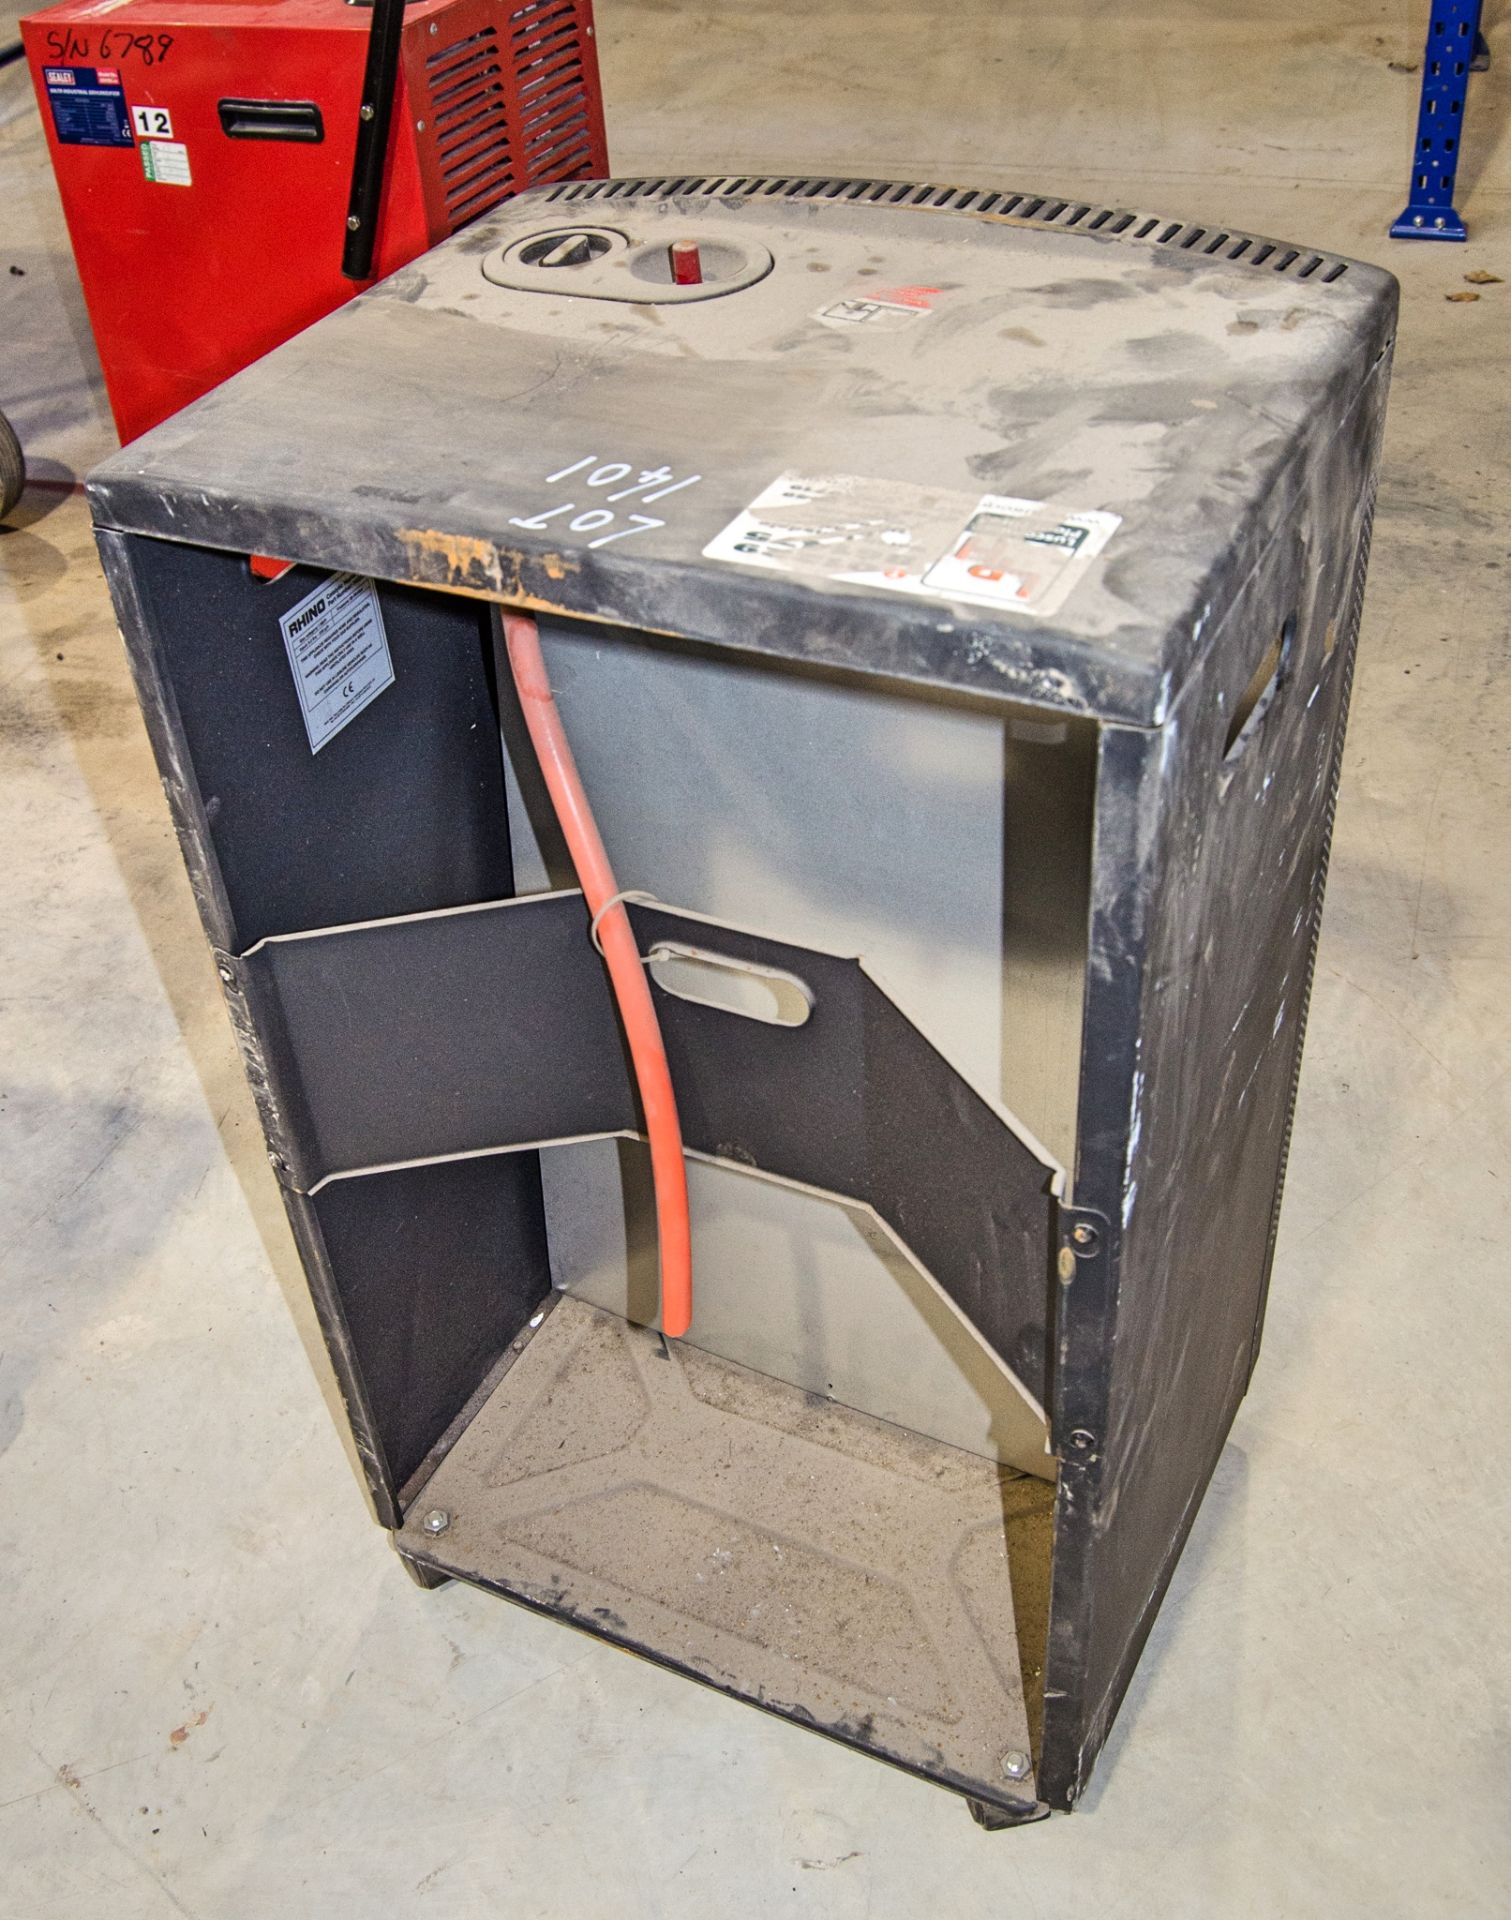 Rhino gas fire heater - Image 2 of 2